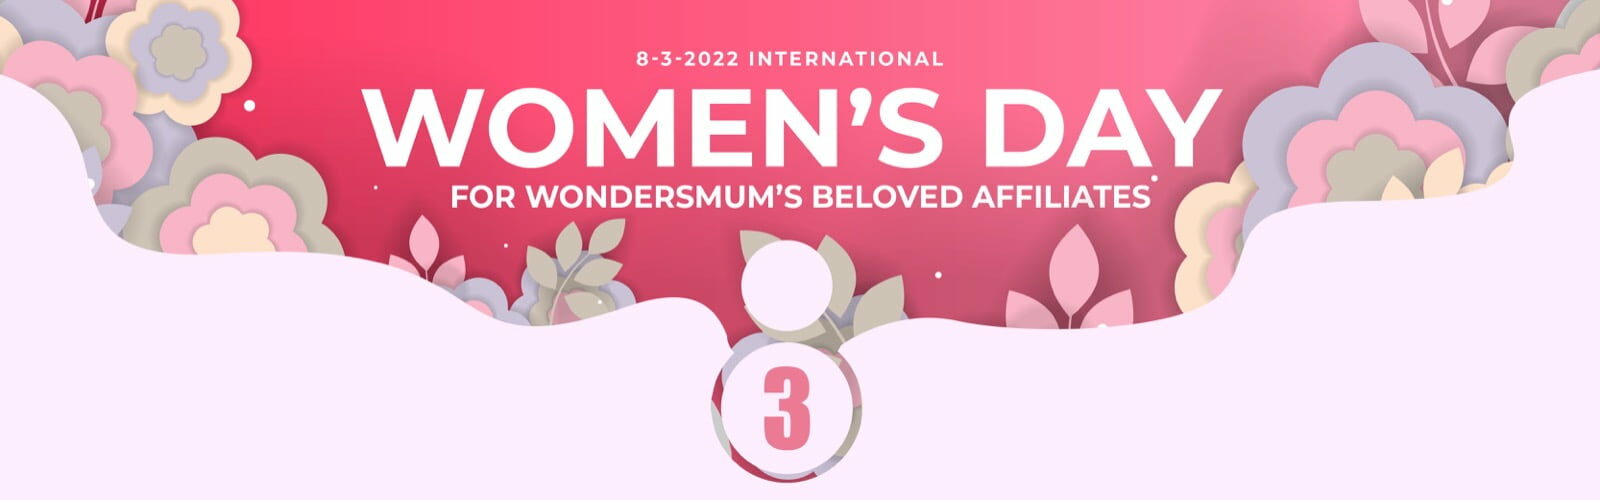 Wondersmum | Woman day 1600x500 p1 04